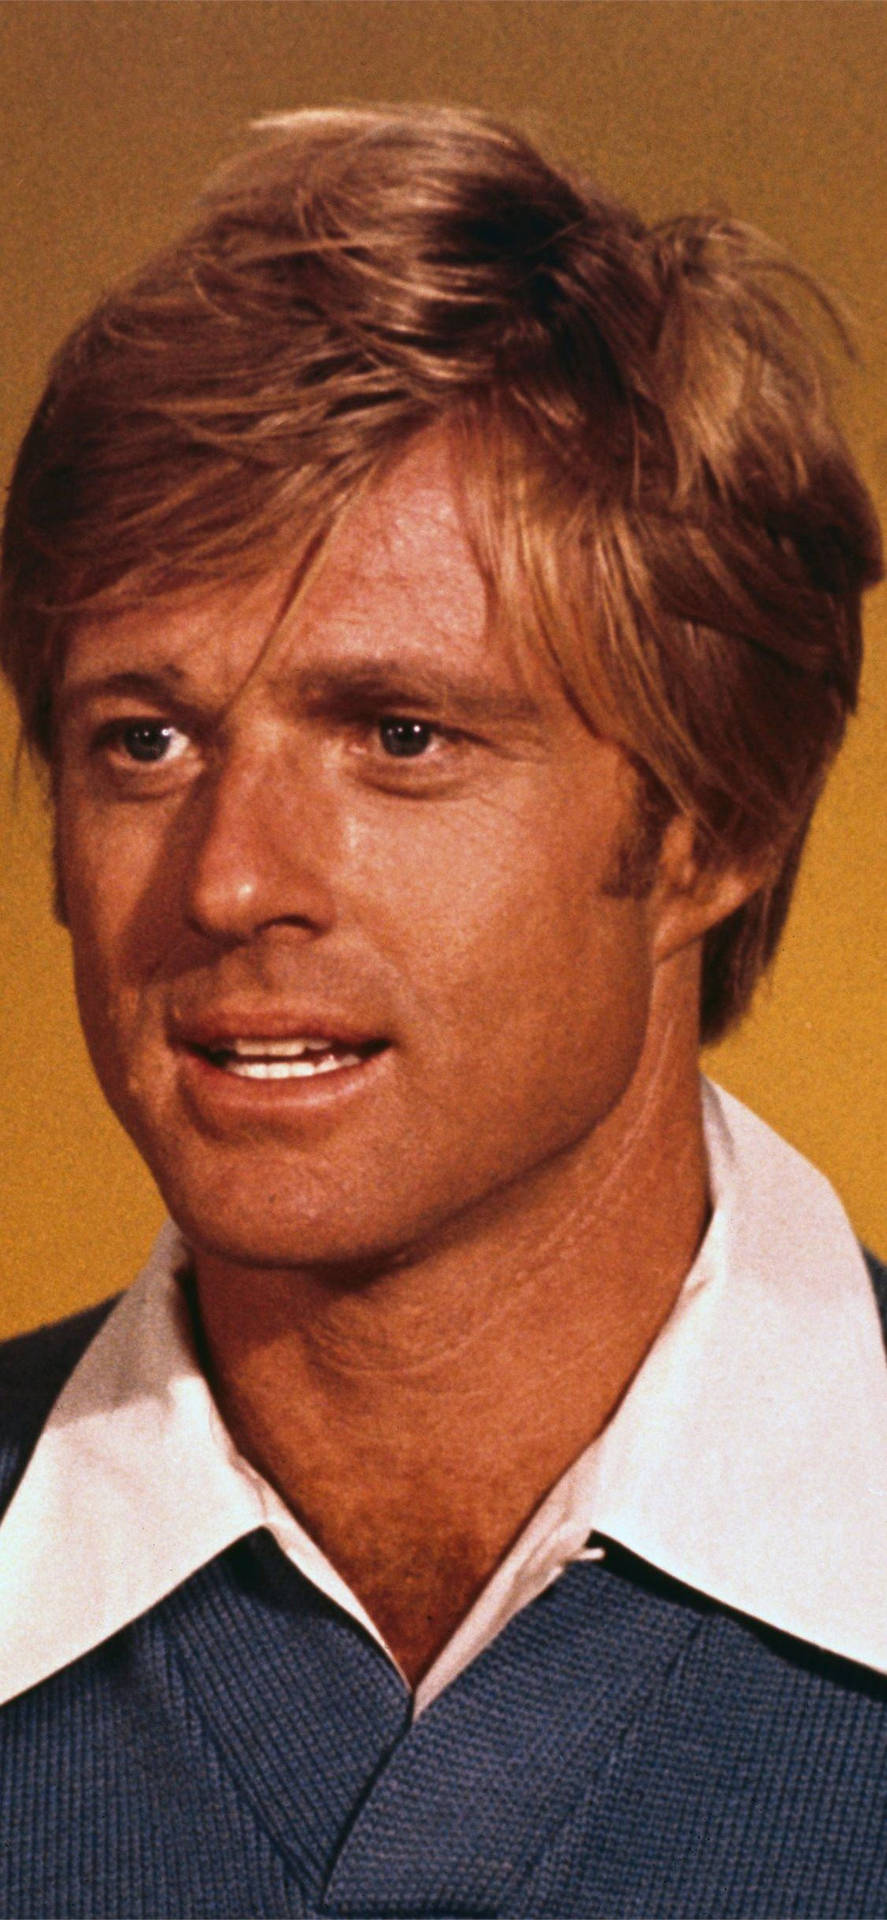 Iconic Shot Of Oscar-winning Actor, Robert Redford